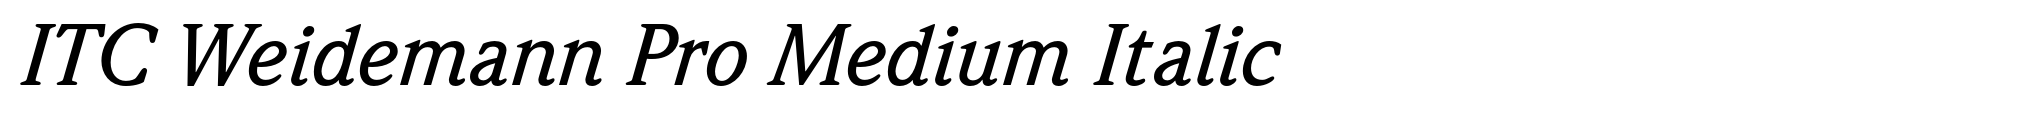 ITC Weidemann Pro Medium Italic image